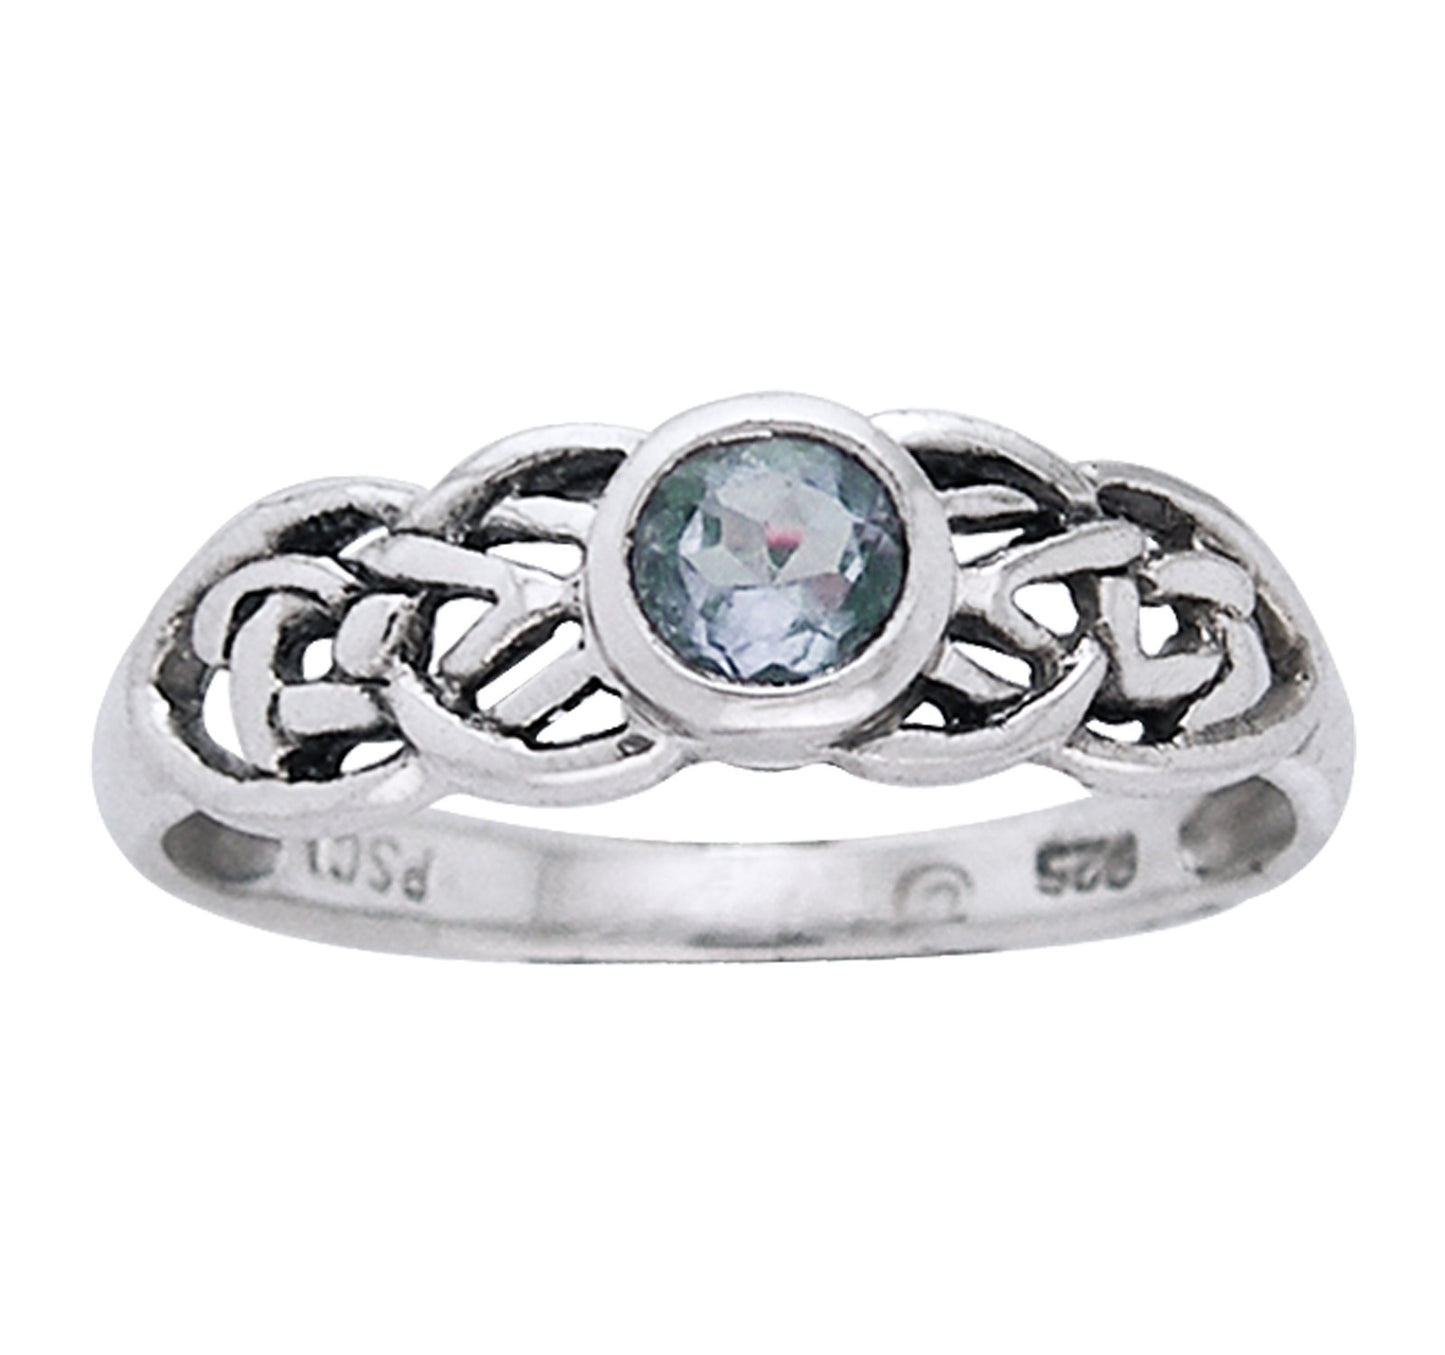 Petite Celtic Knot Birthstone Ring Sterling Silver Genuine Blue Topaz For December - Silver Insanity